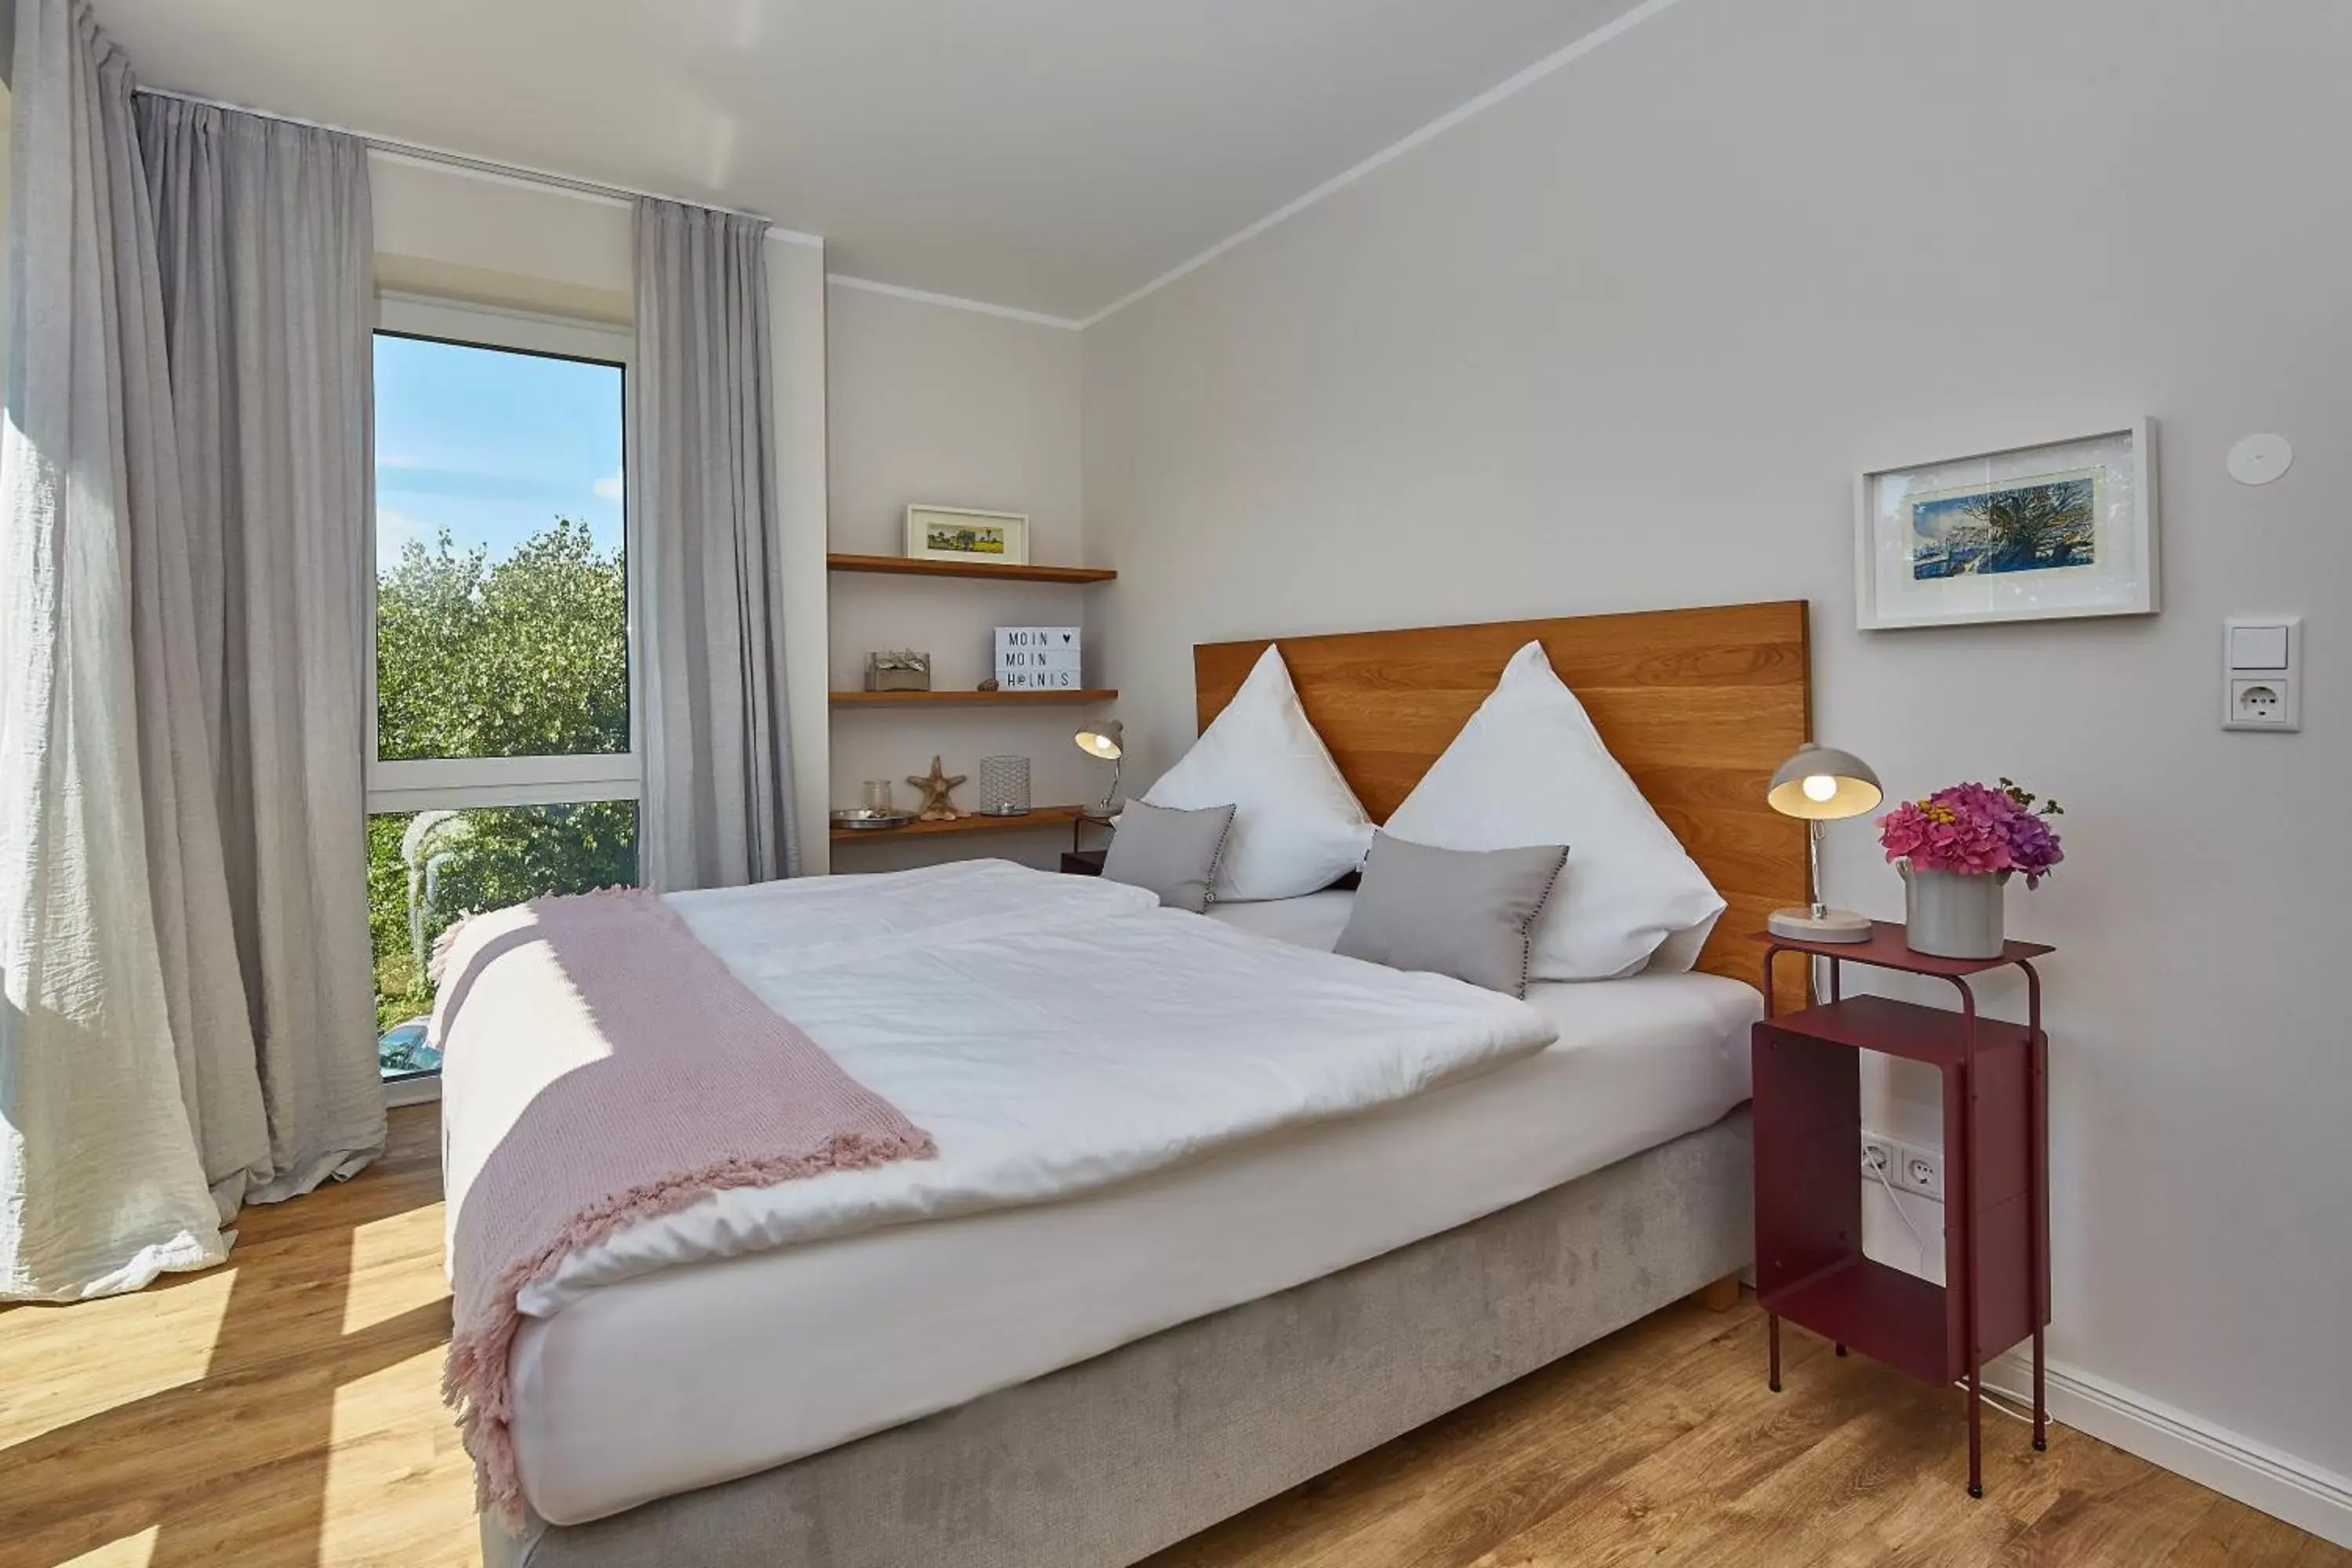 Bed, Room Photo in Ostsee-Strandhaus-Holnis